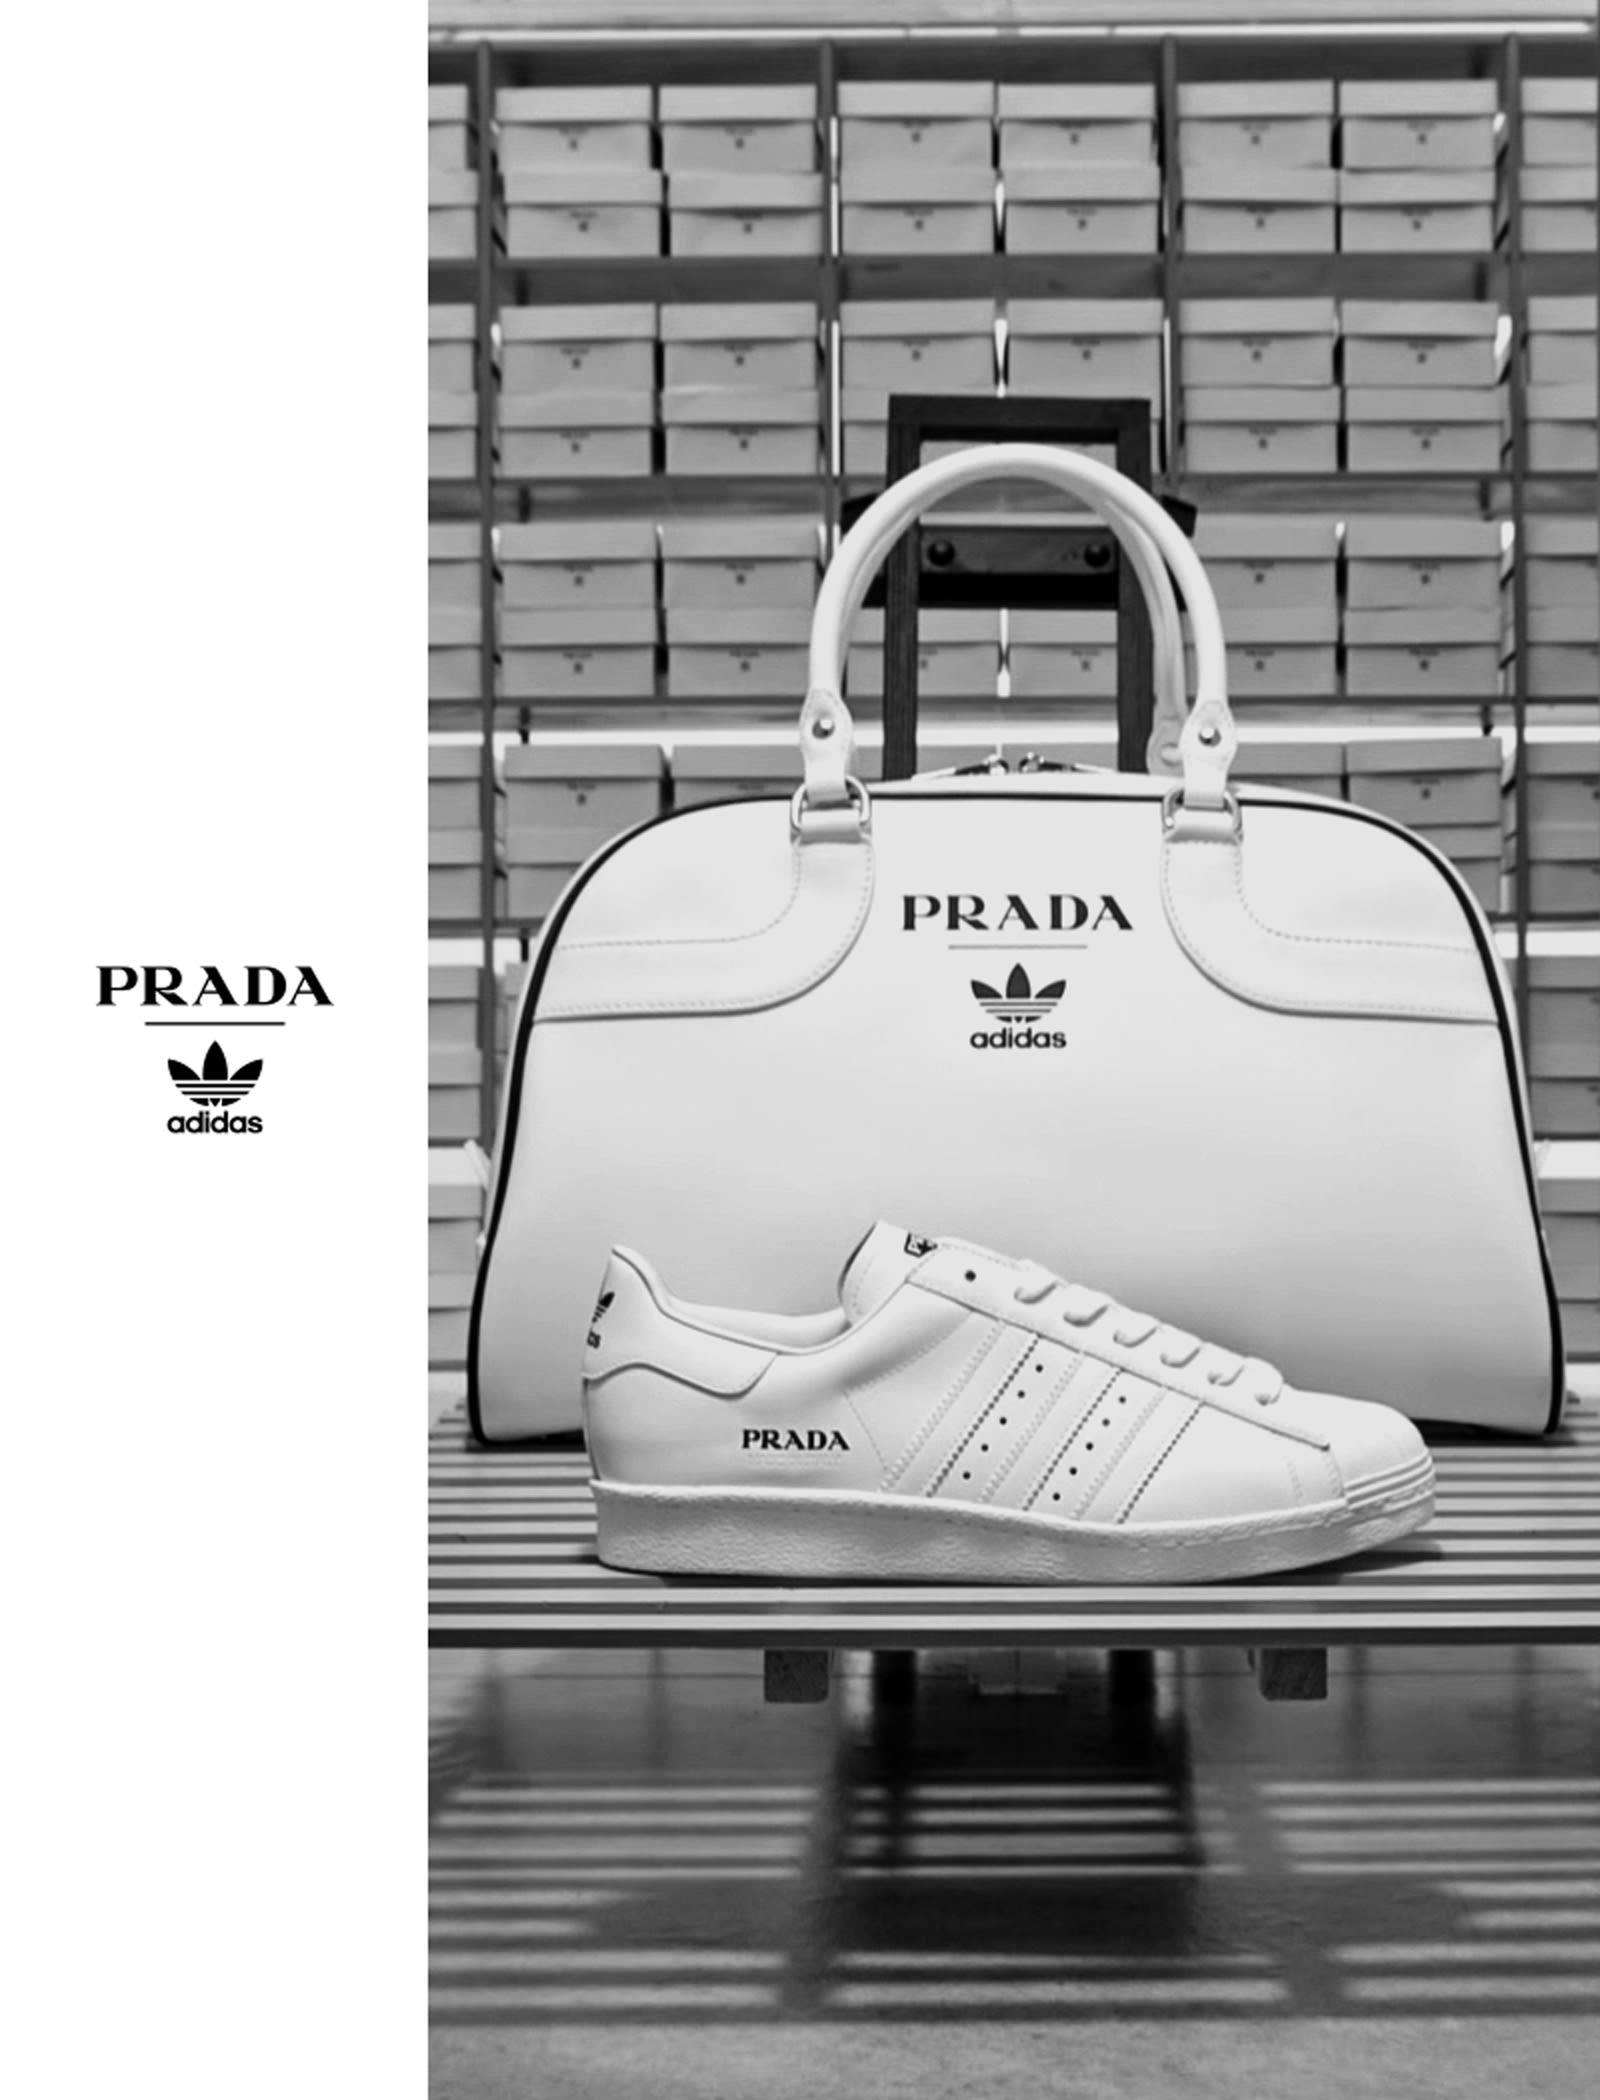 prada for adidas limited edition price